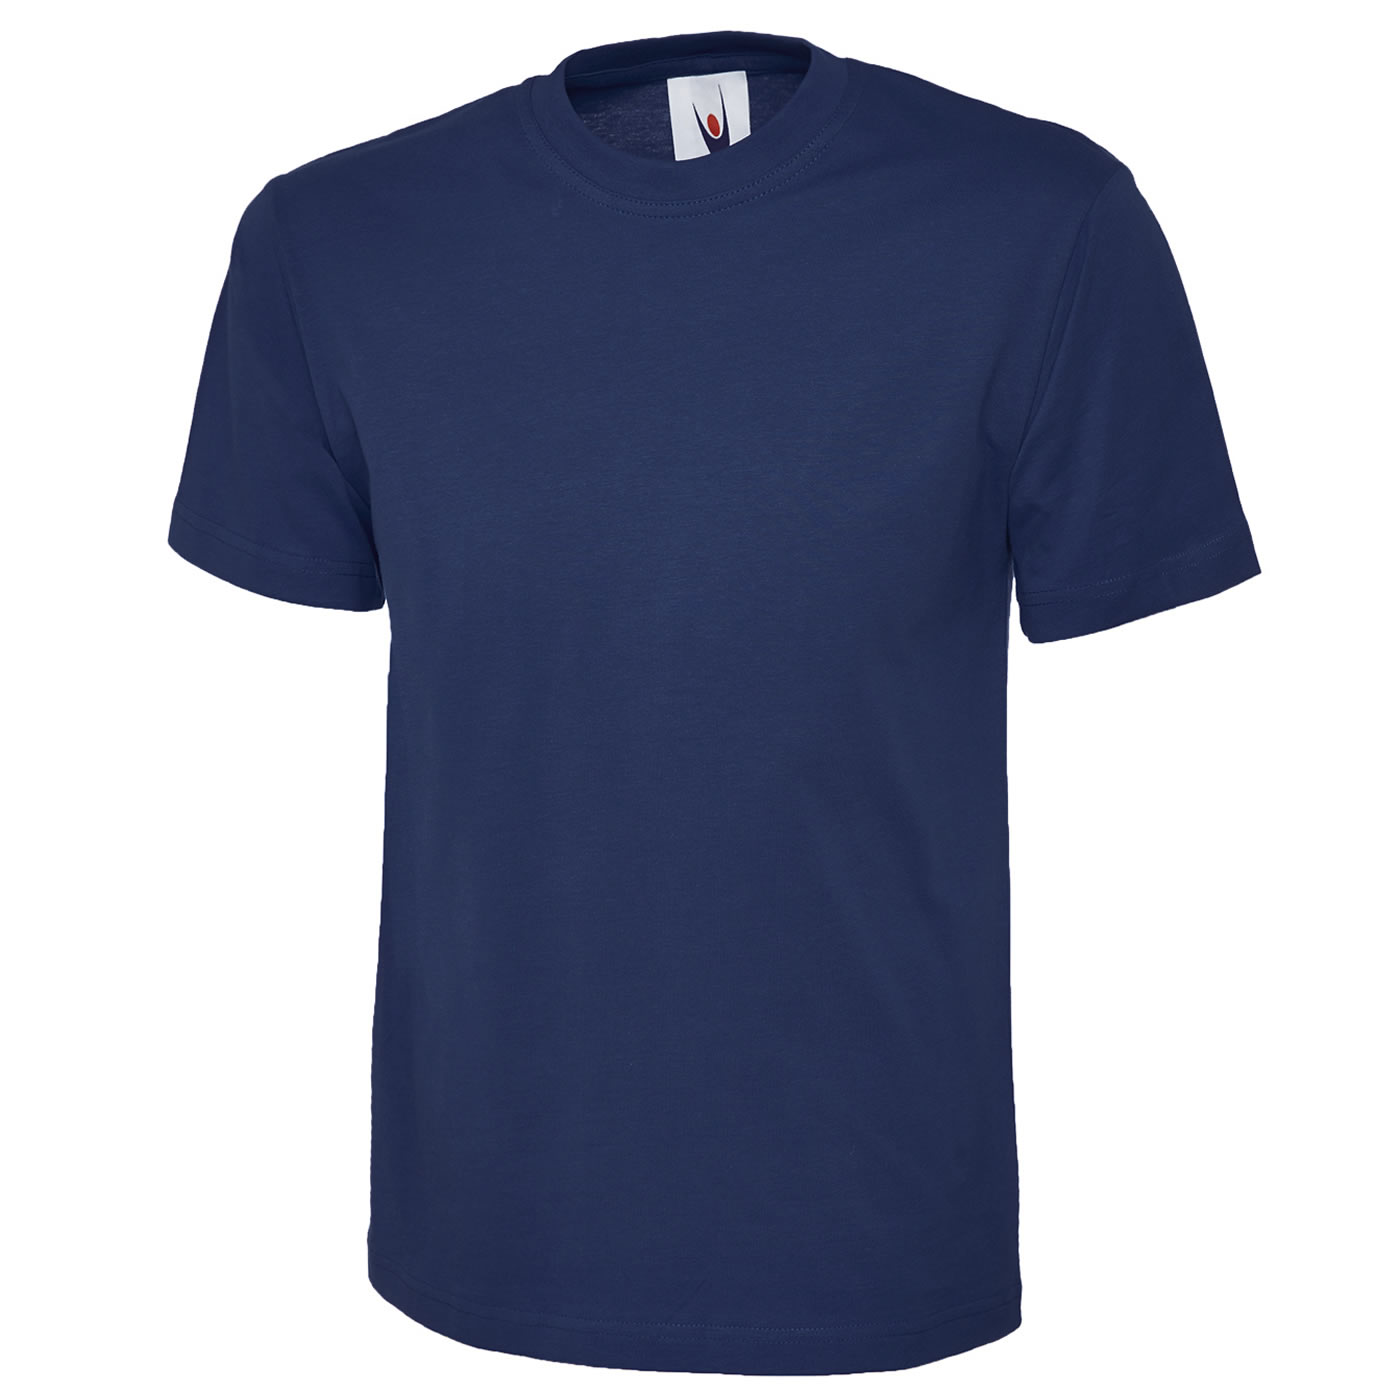 Uneek Classic T-Shirt 100% Cotton Tee Shirt Short Sleeve Casual ...